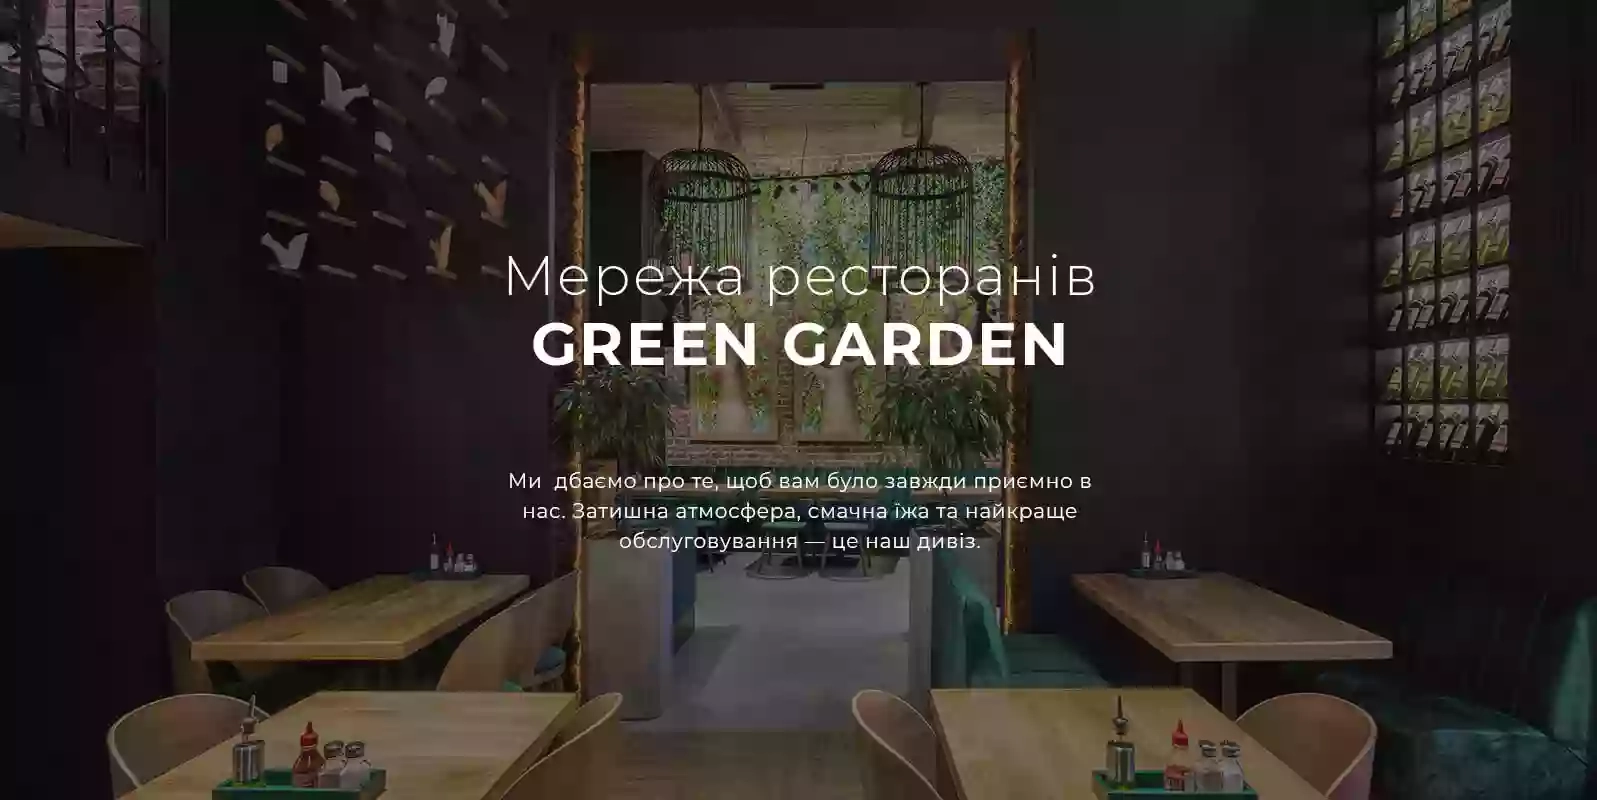 Green Garden (Stryi, Shevchenka 105b)